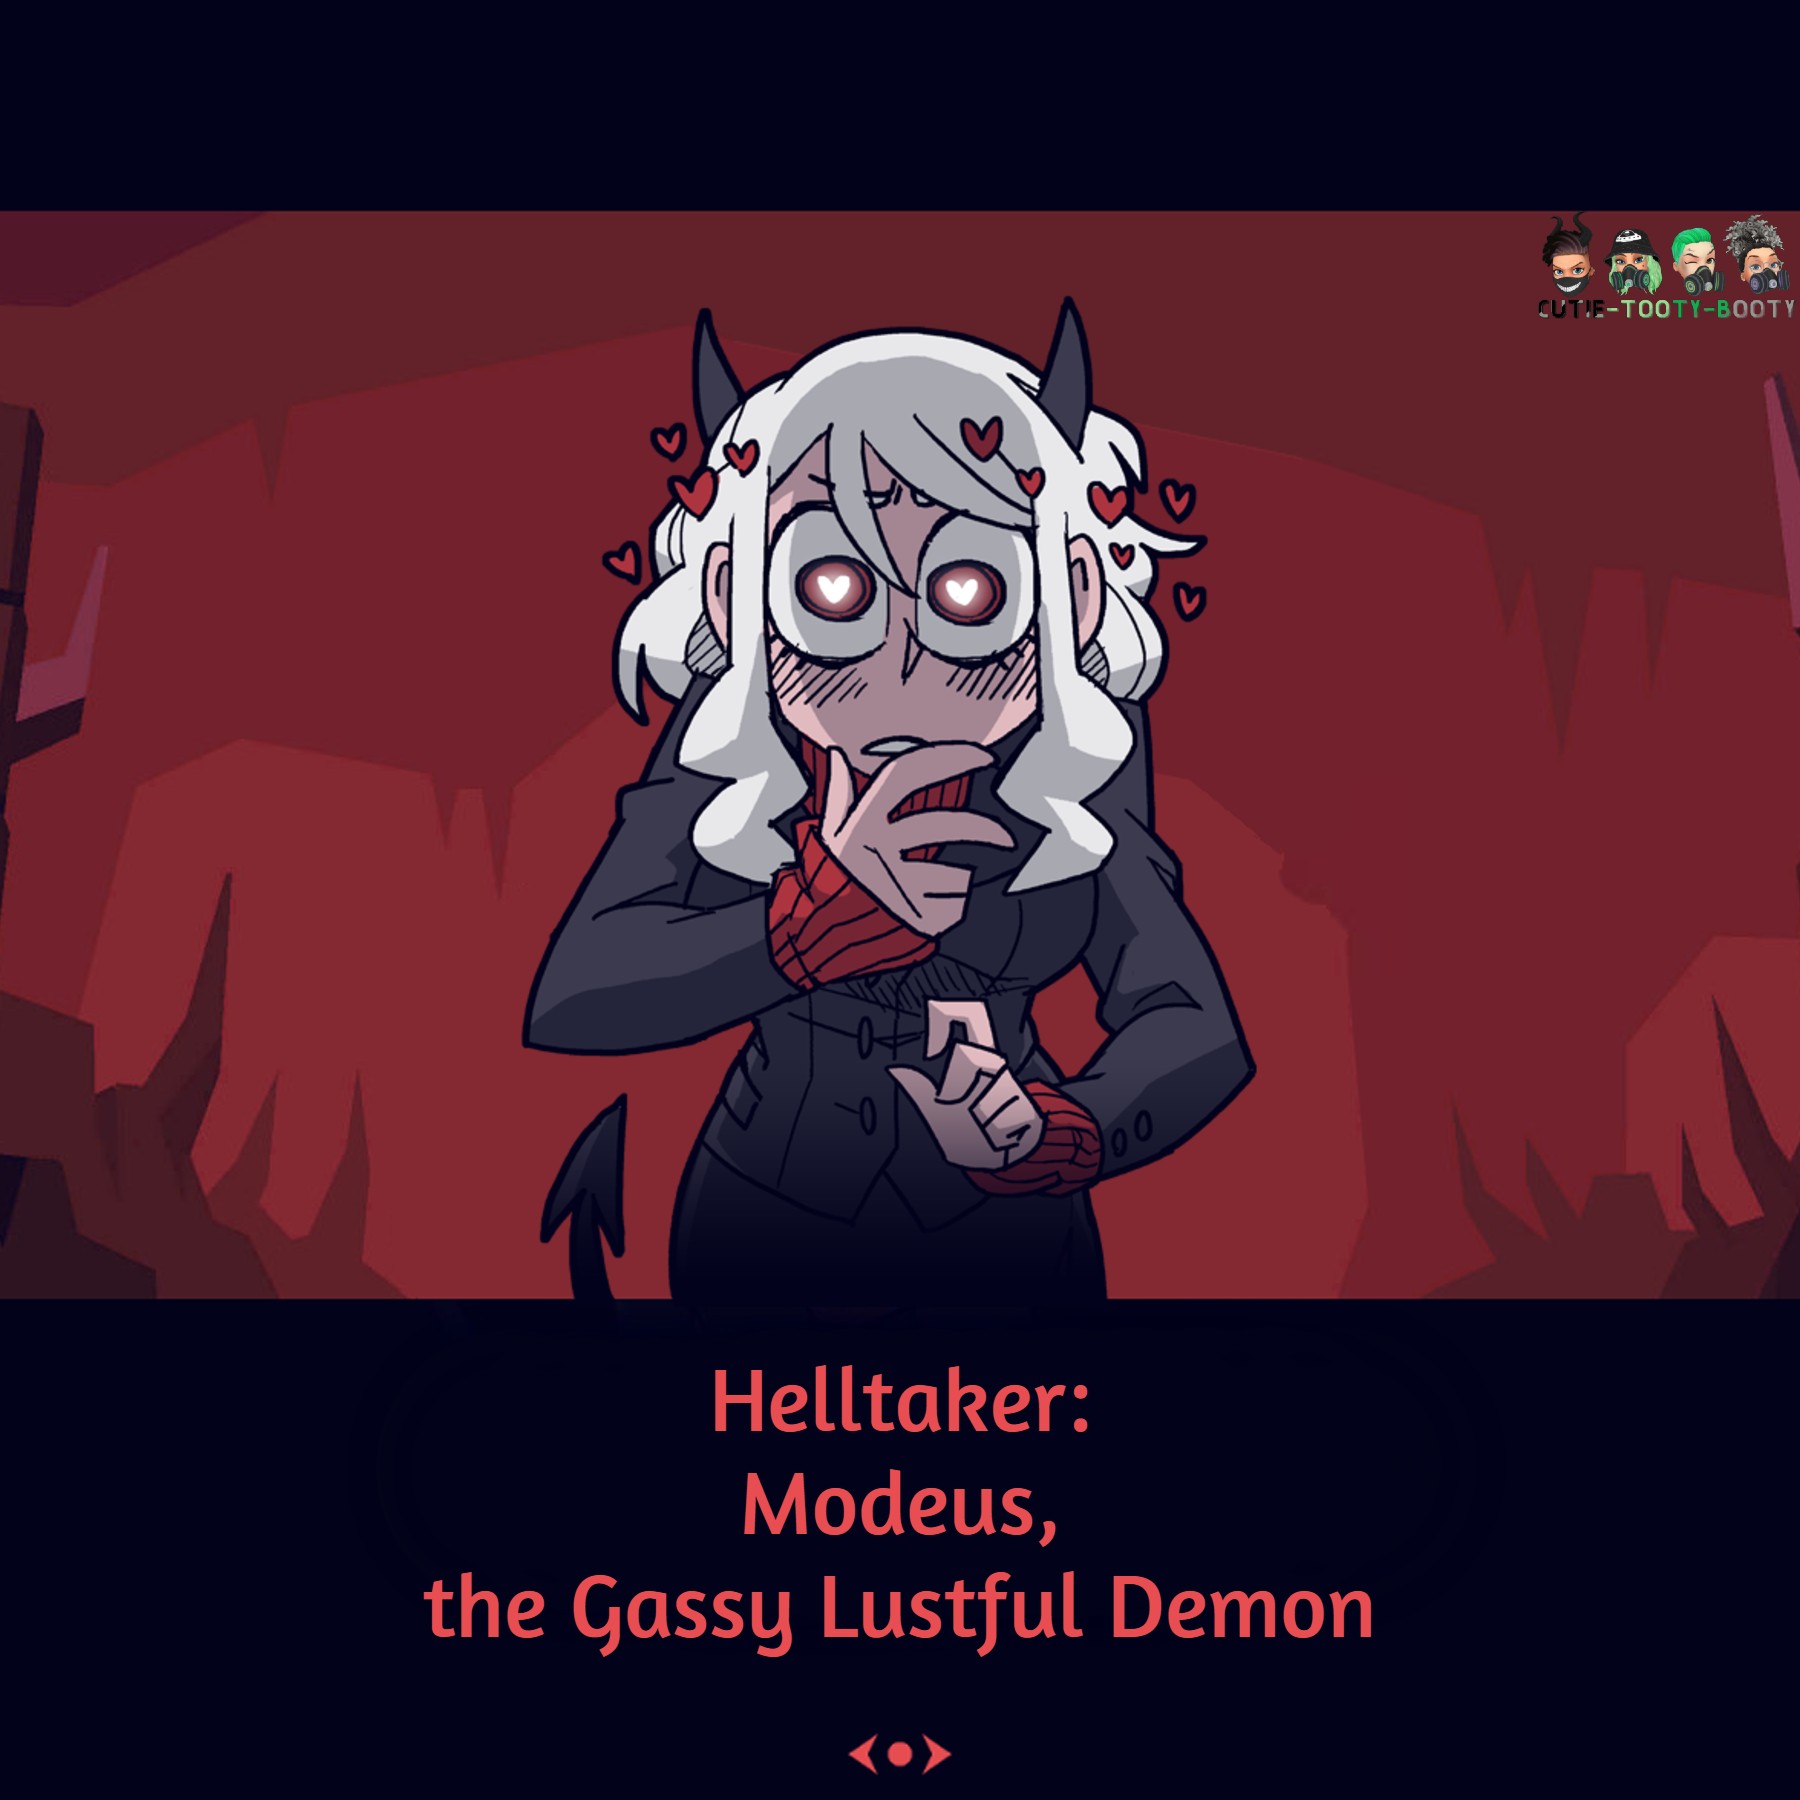 Helltaker: Modeus, the Gassy Lustful Demon